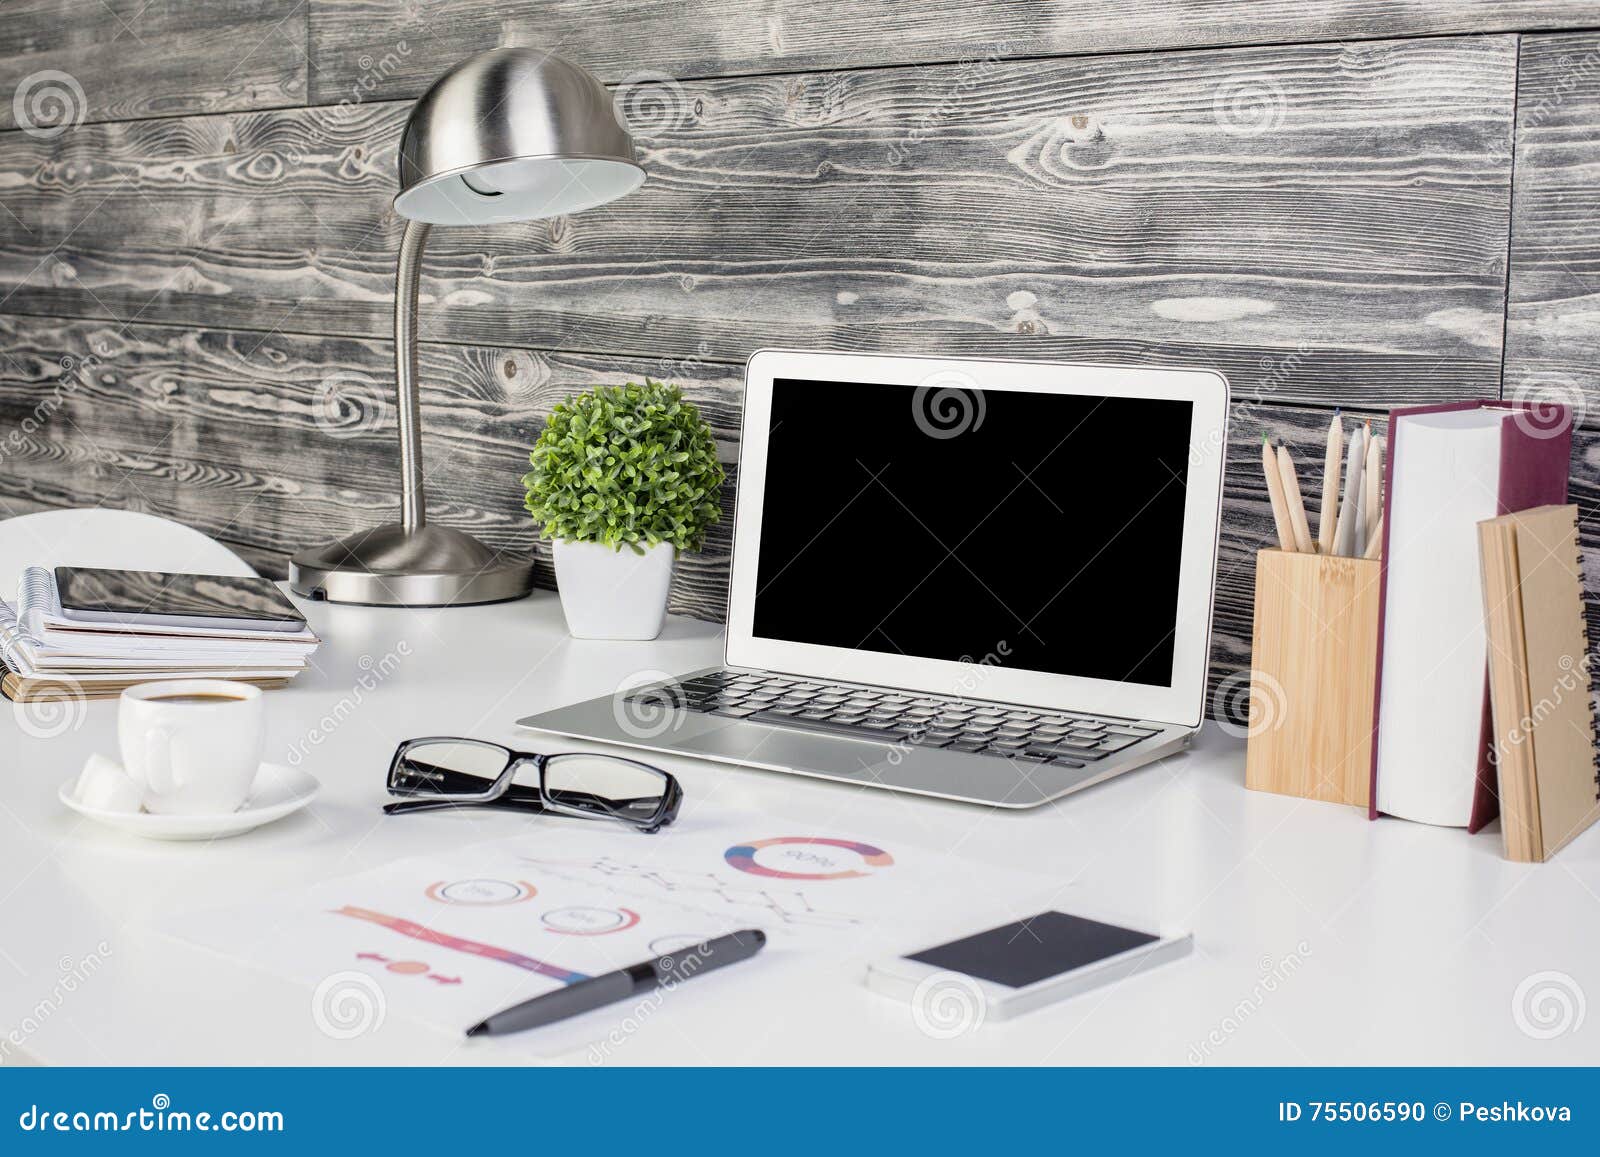 creative office desktop with blank laptop